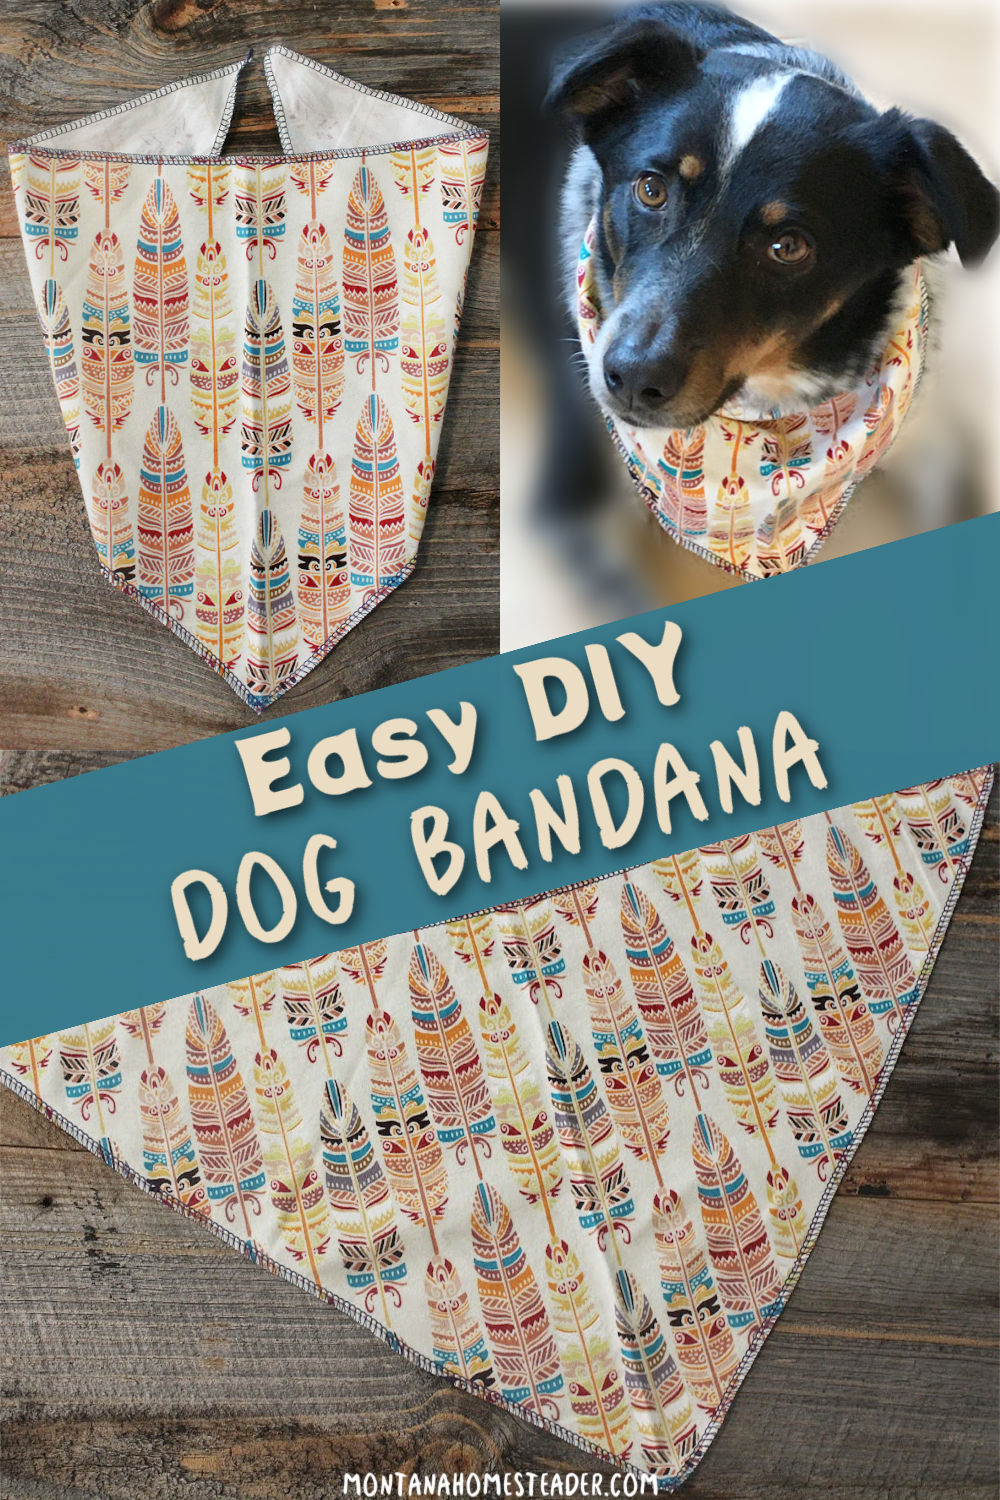 Easy DIY dog bandana how to sew a tie on dog bandana black and white Australian Shepherd mix dog wearing feather print fabric bandana 